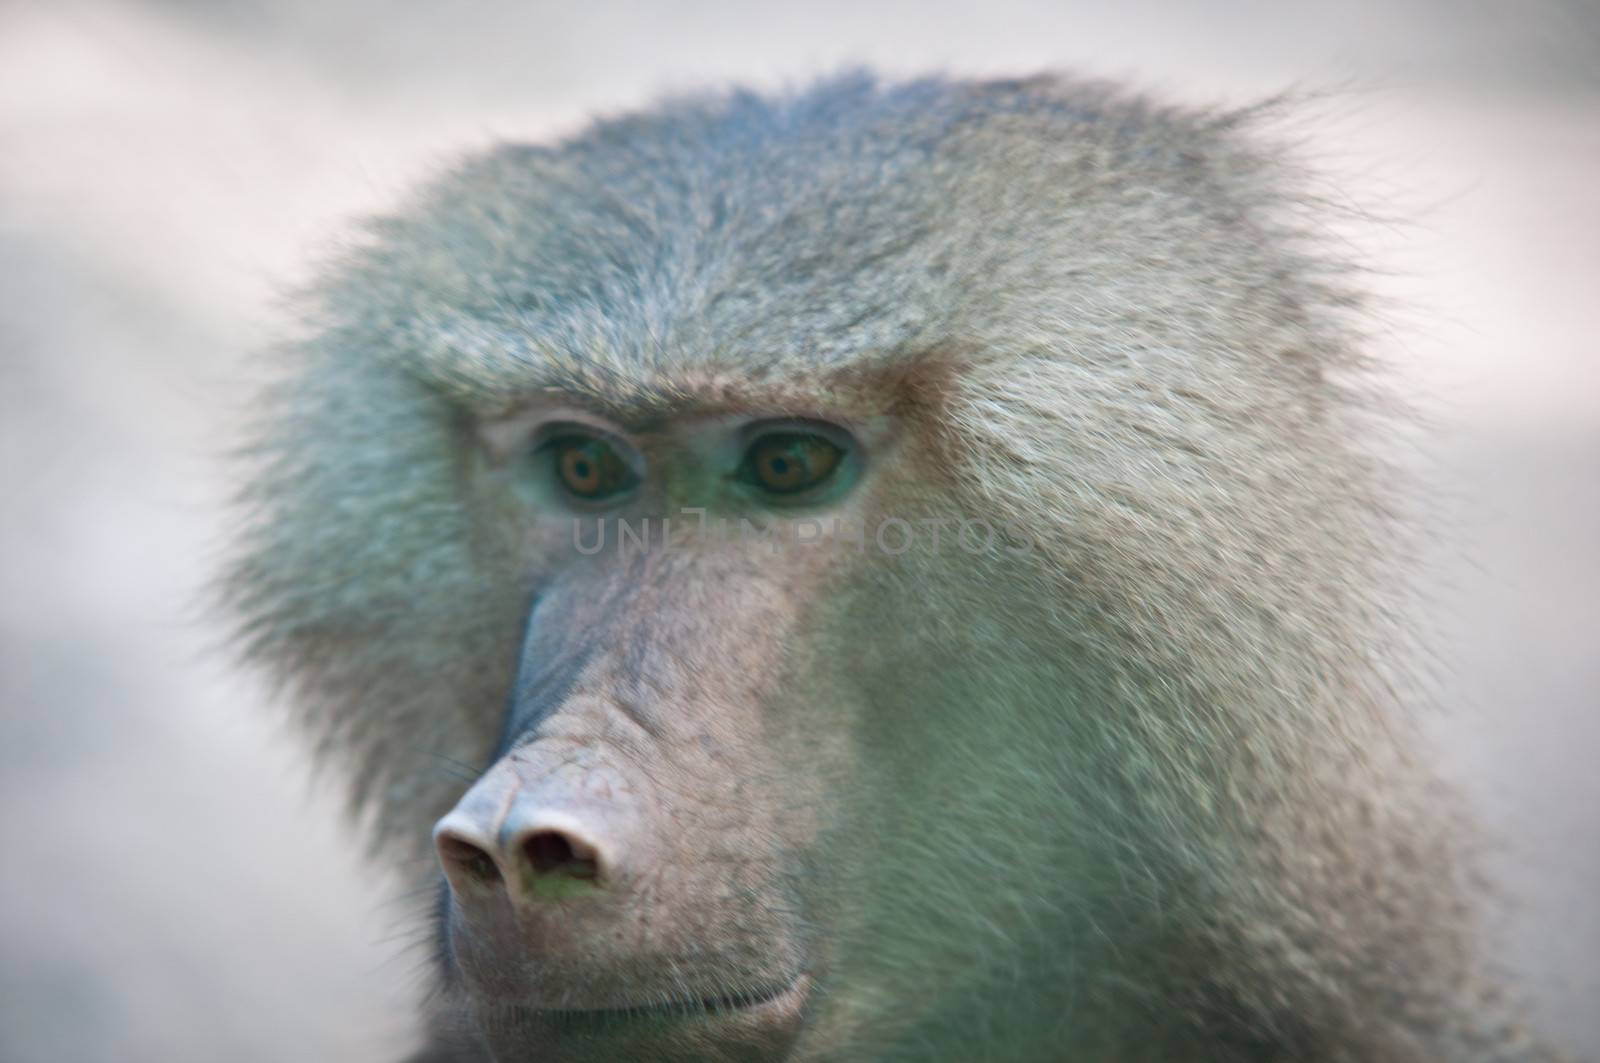 Portrait of Hamadryas baboon close-up .